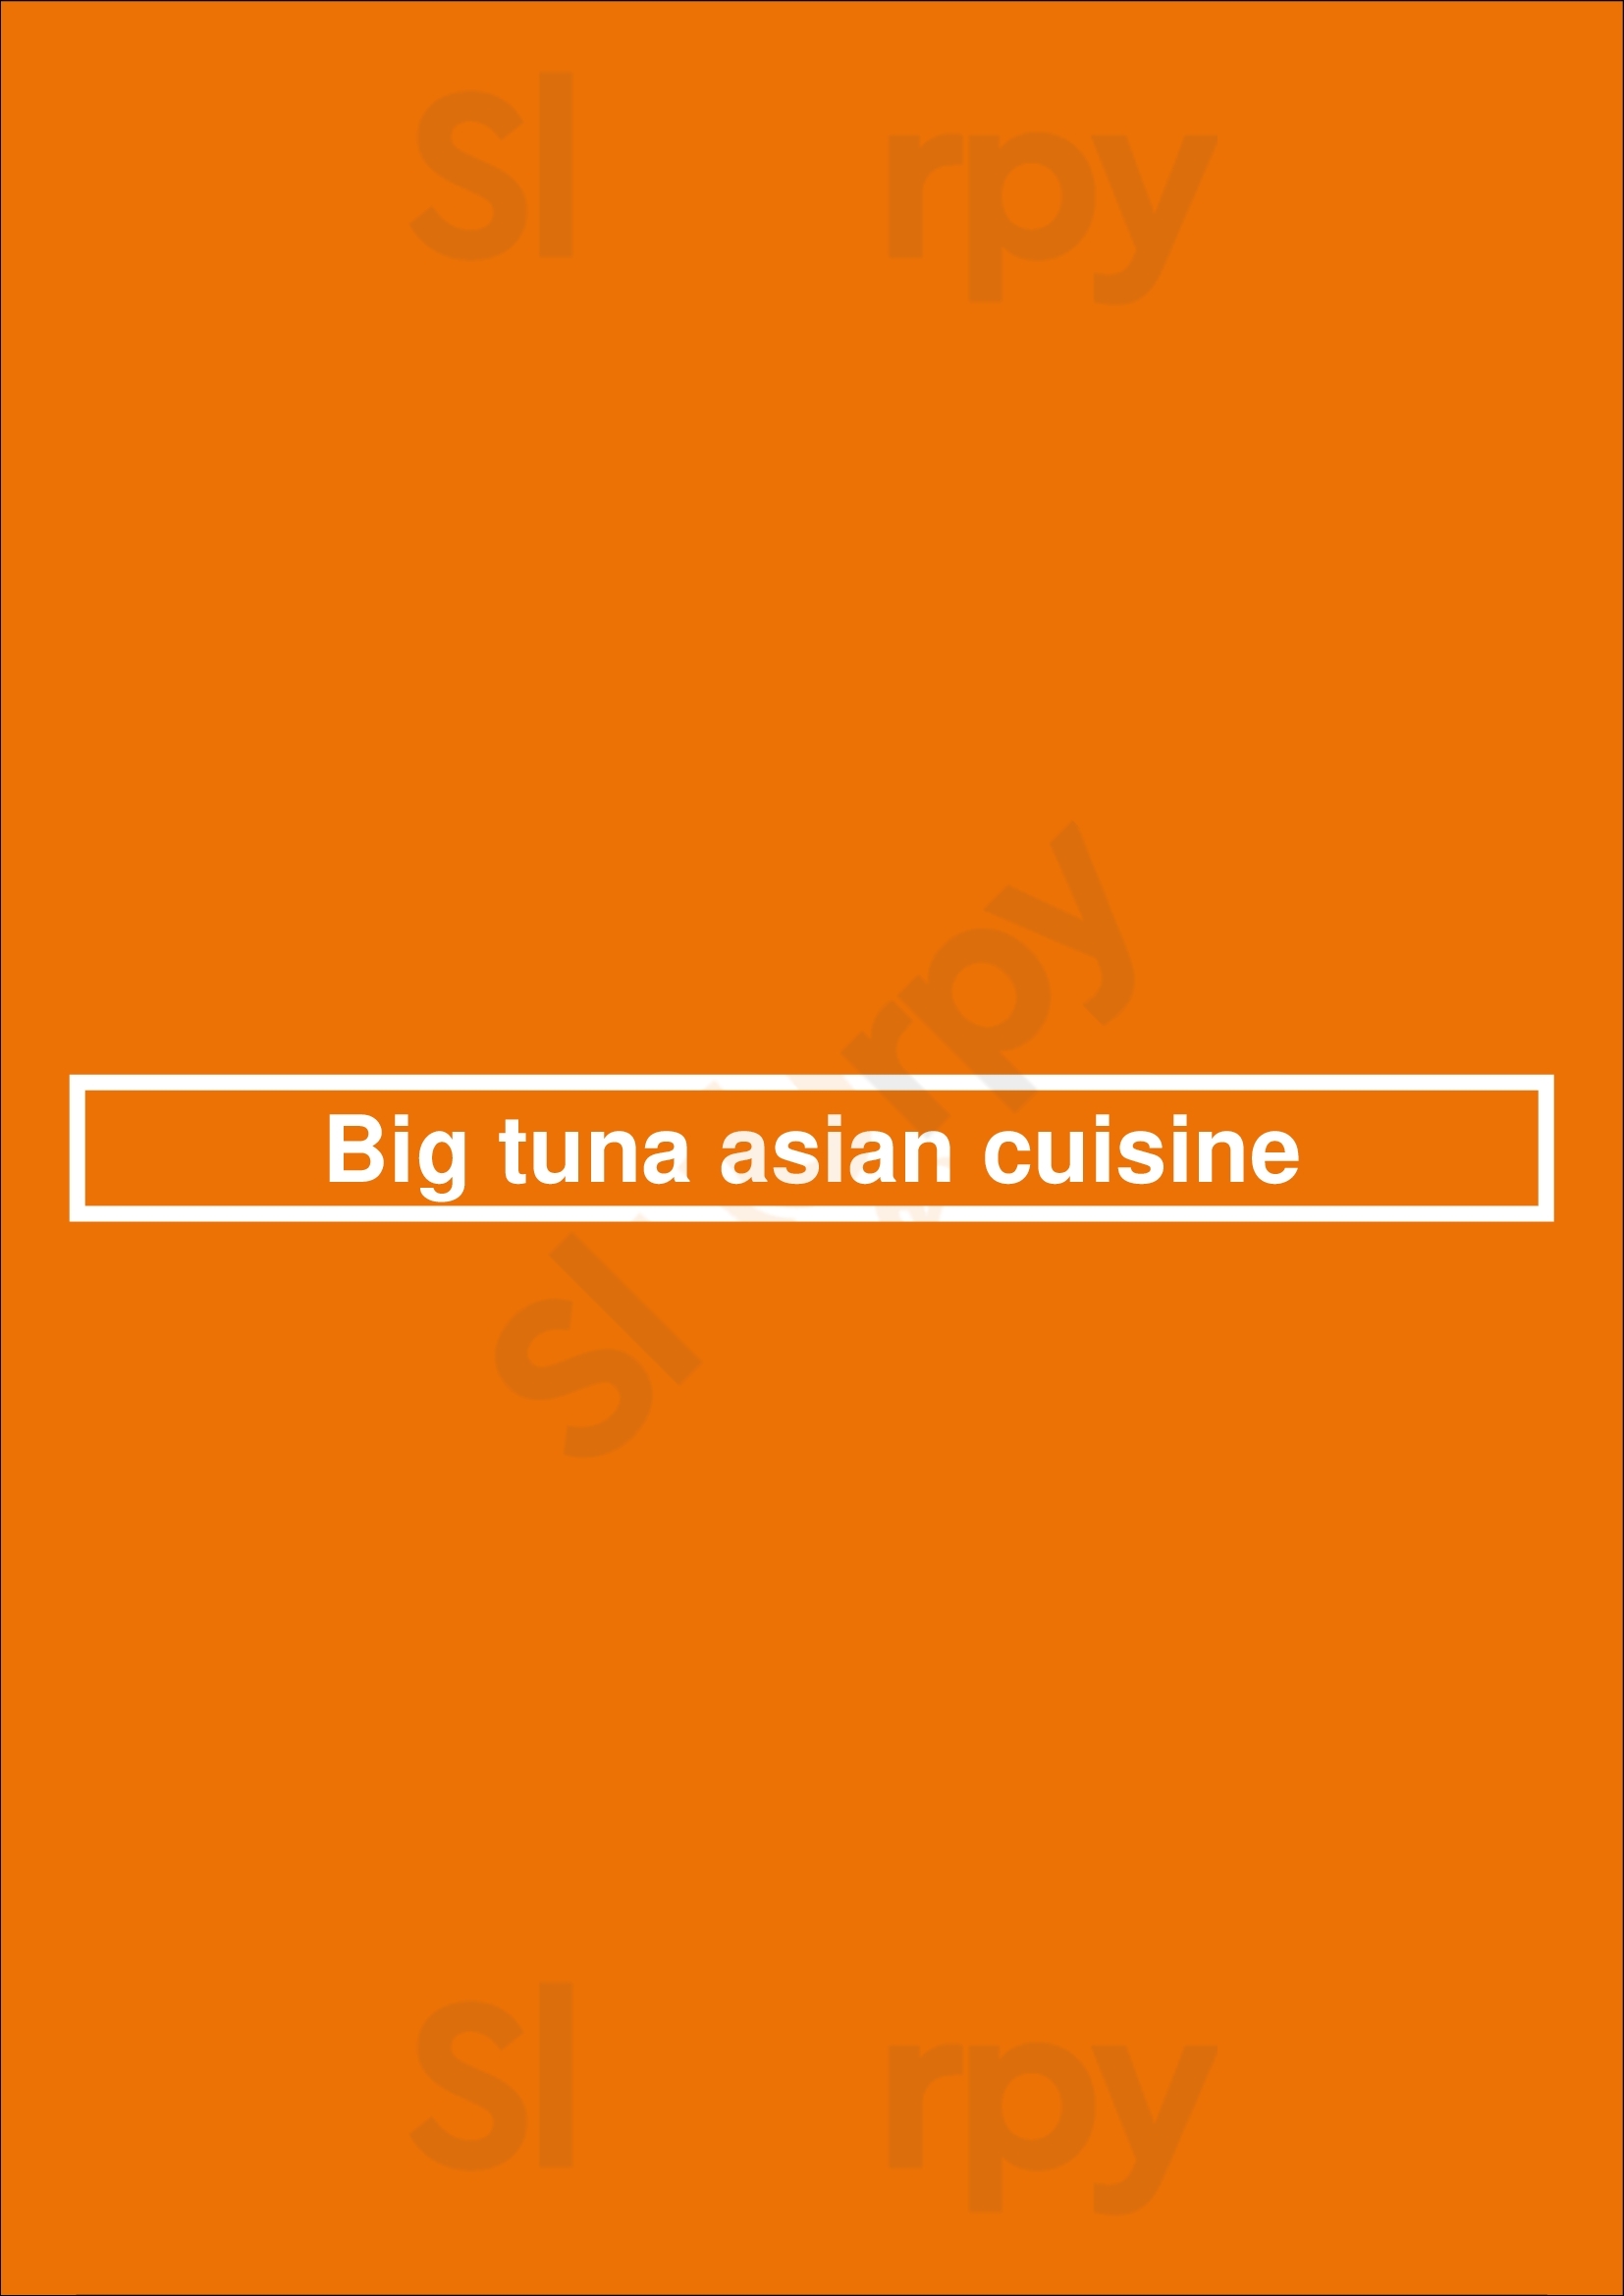 Big Tuna Asian Cuisine St. Catharines Menu - 1